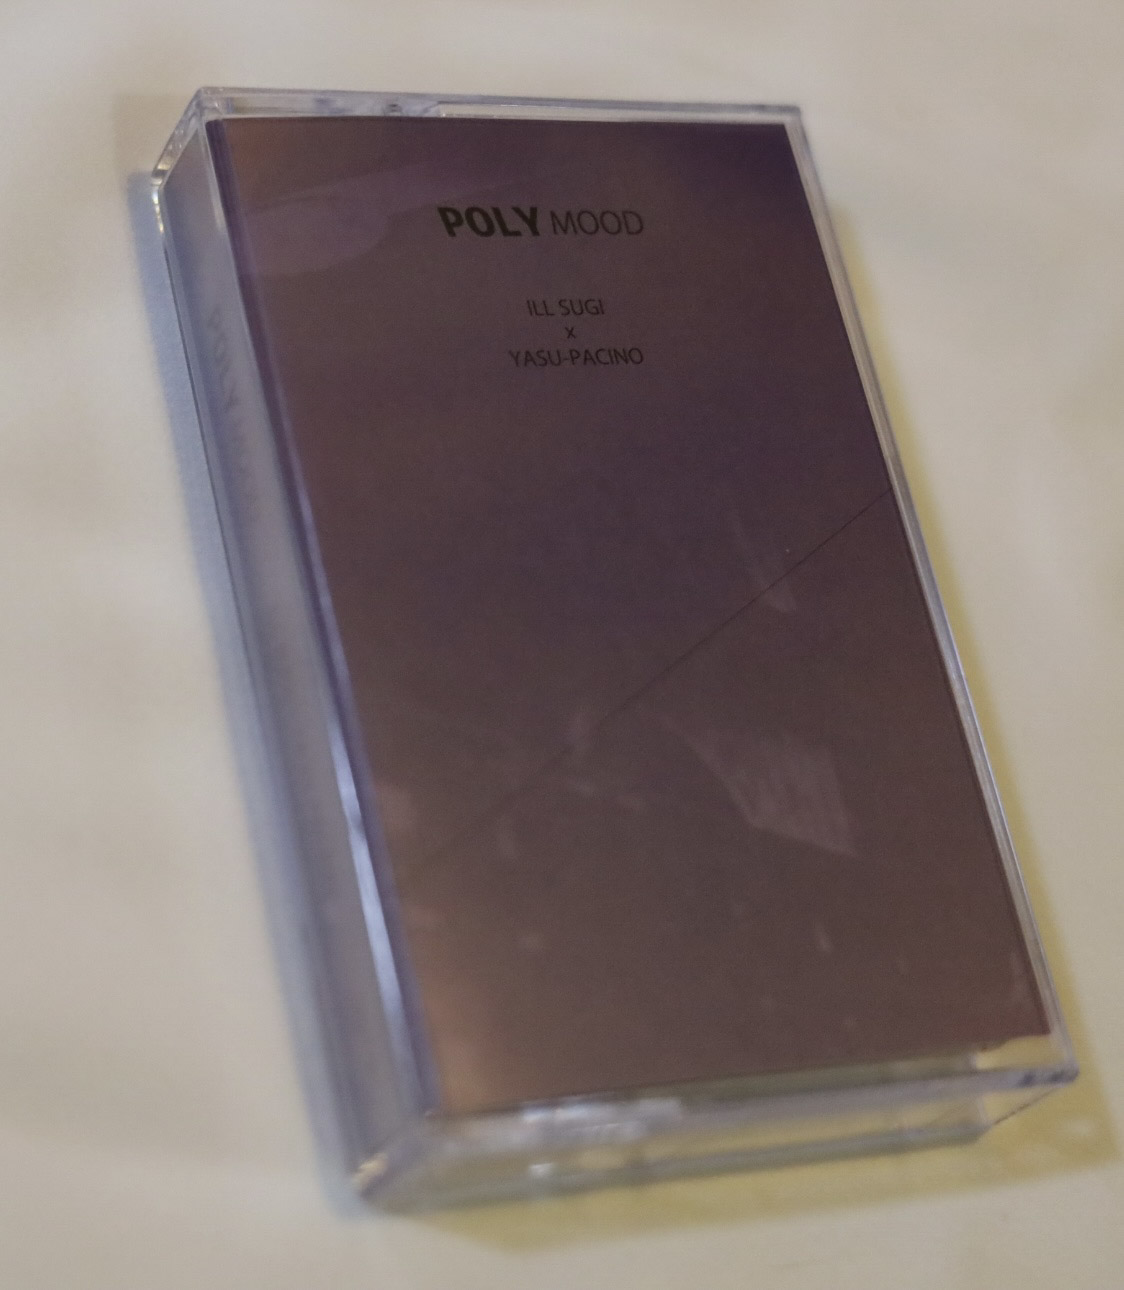 本日発売!Ill SugixYasu-Pacino『POLYMOOD』cassette+DLcode